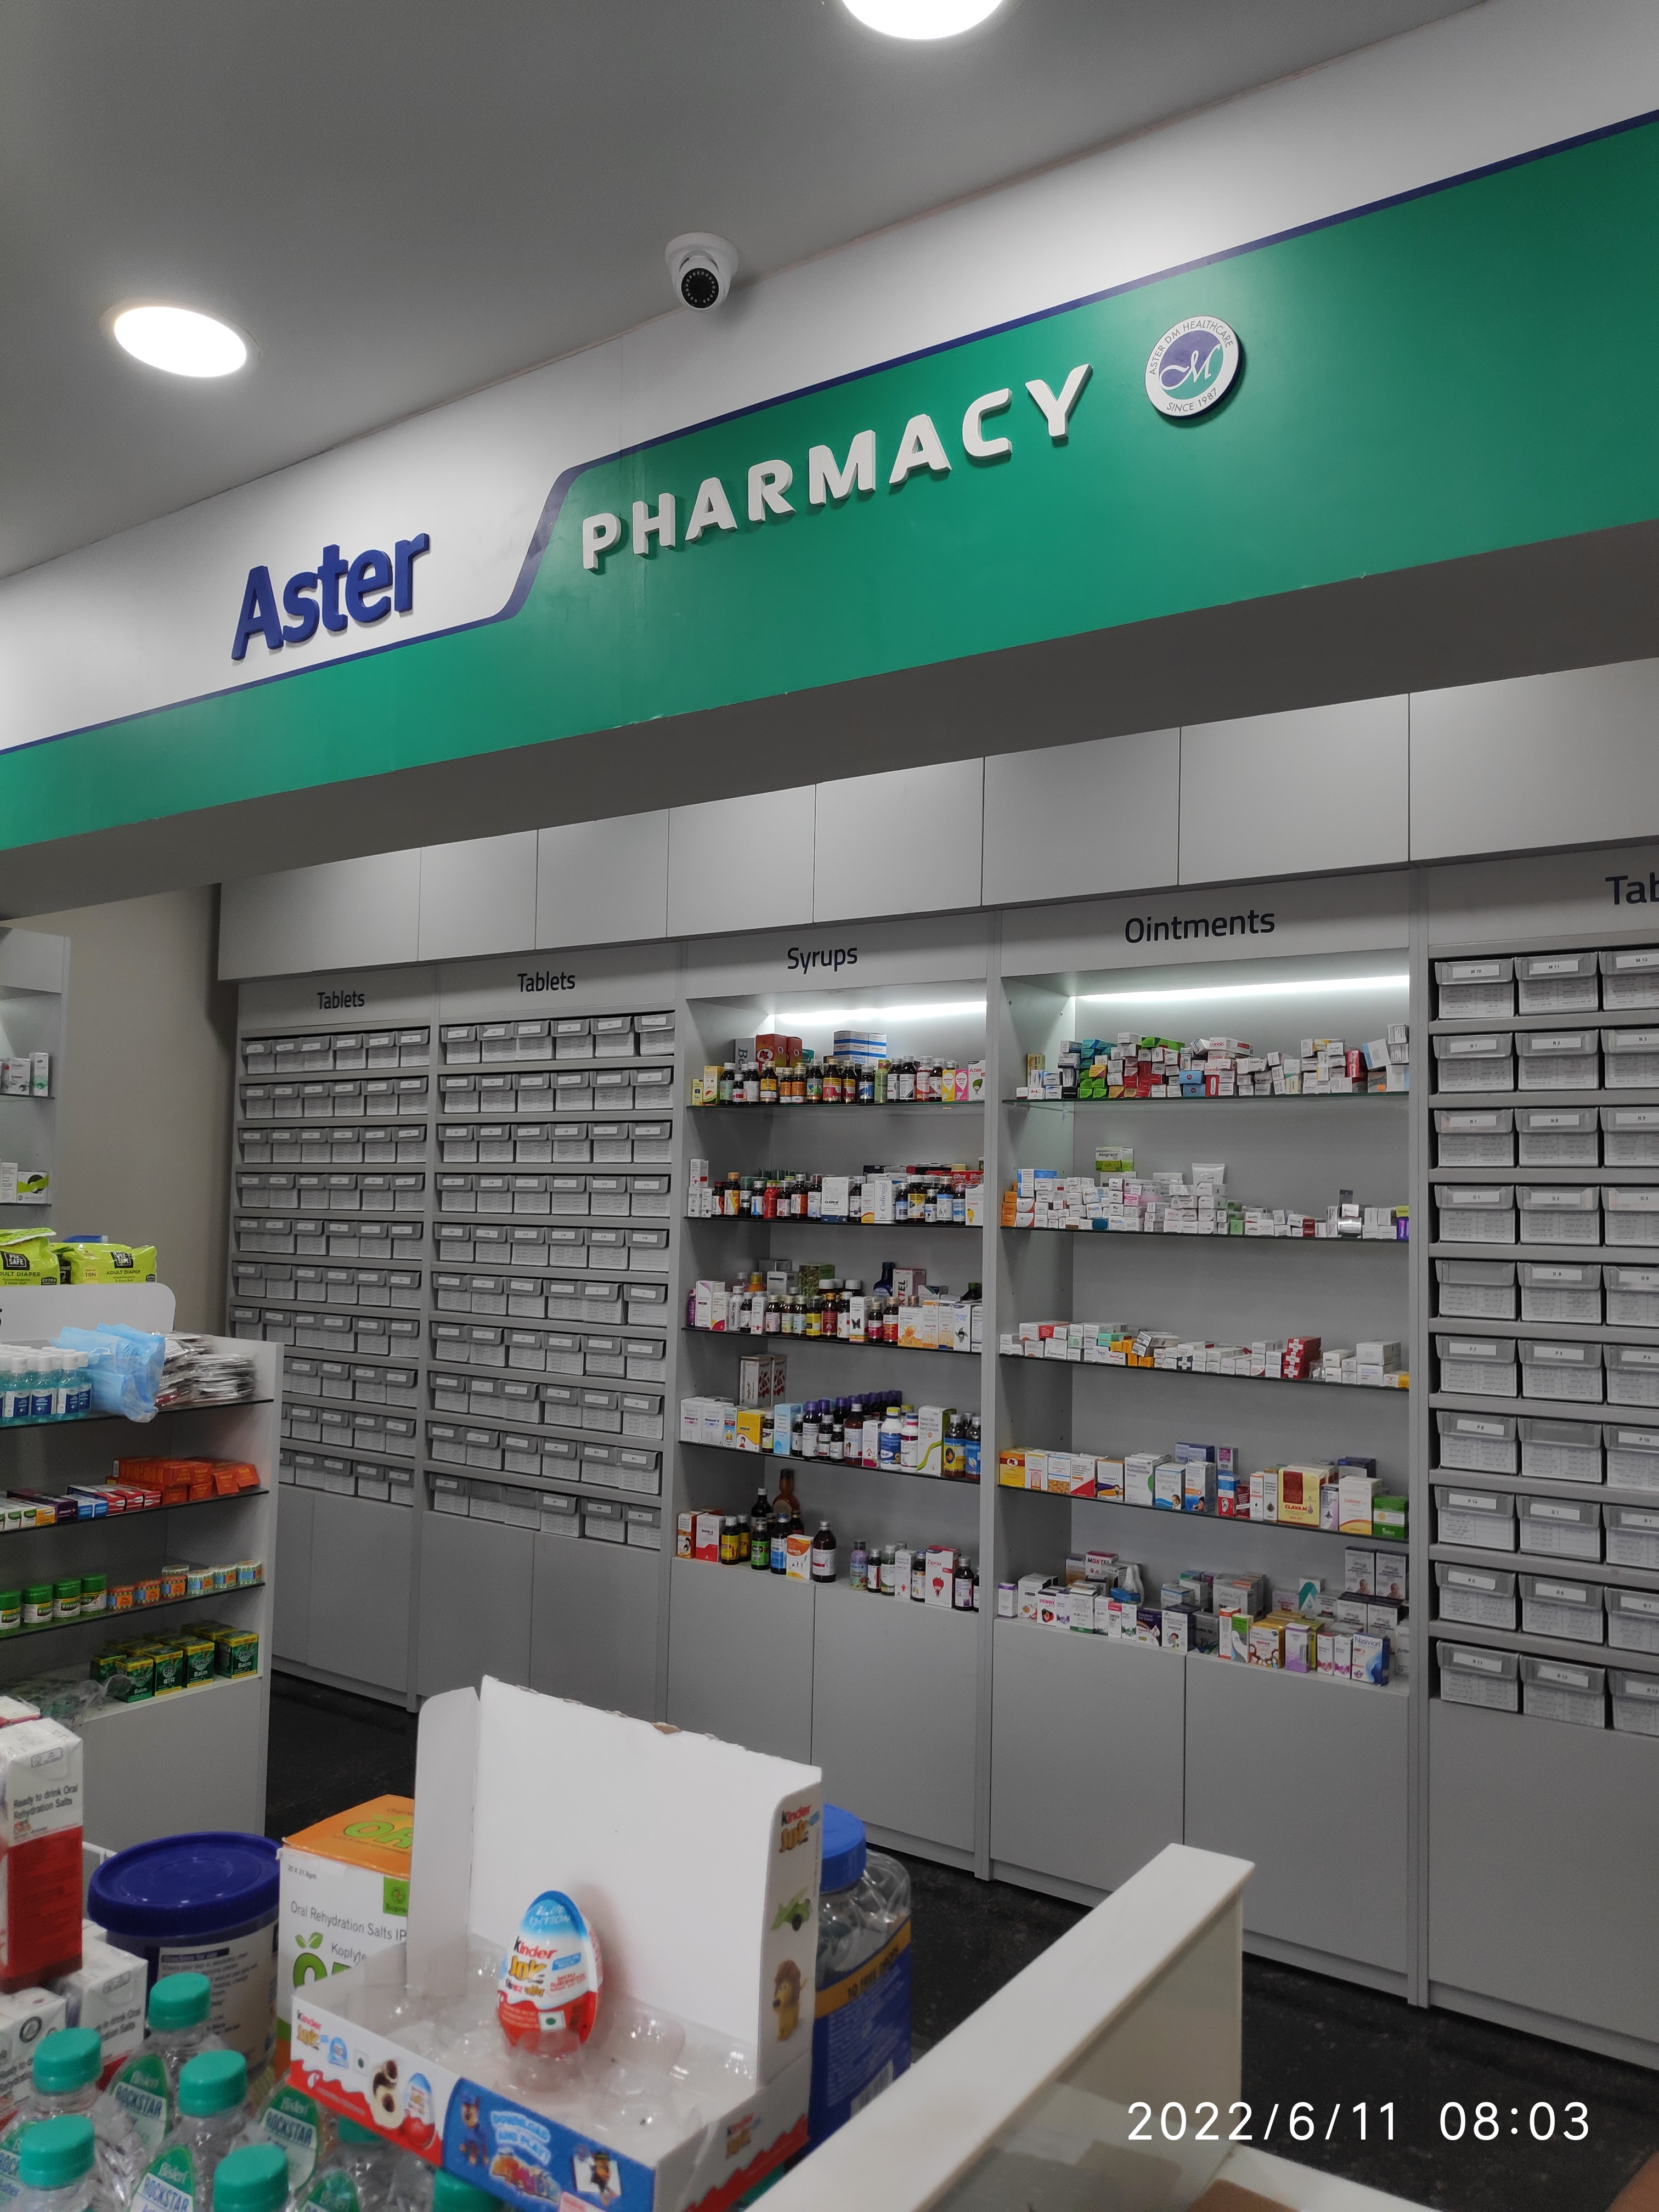 Aster Pharmacy in Rupasri County, Miyapur